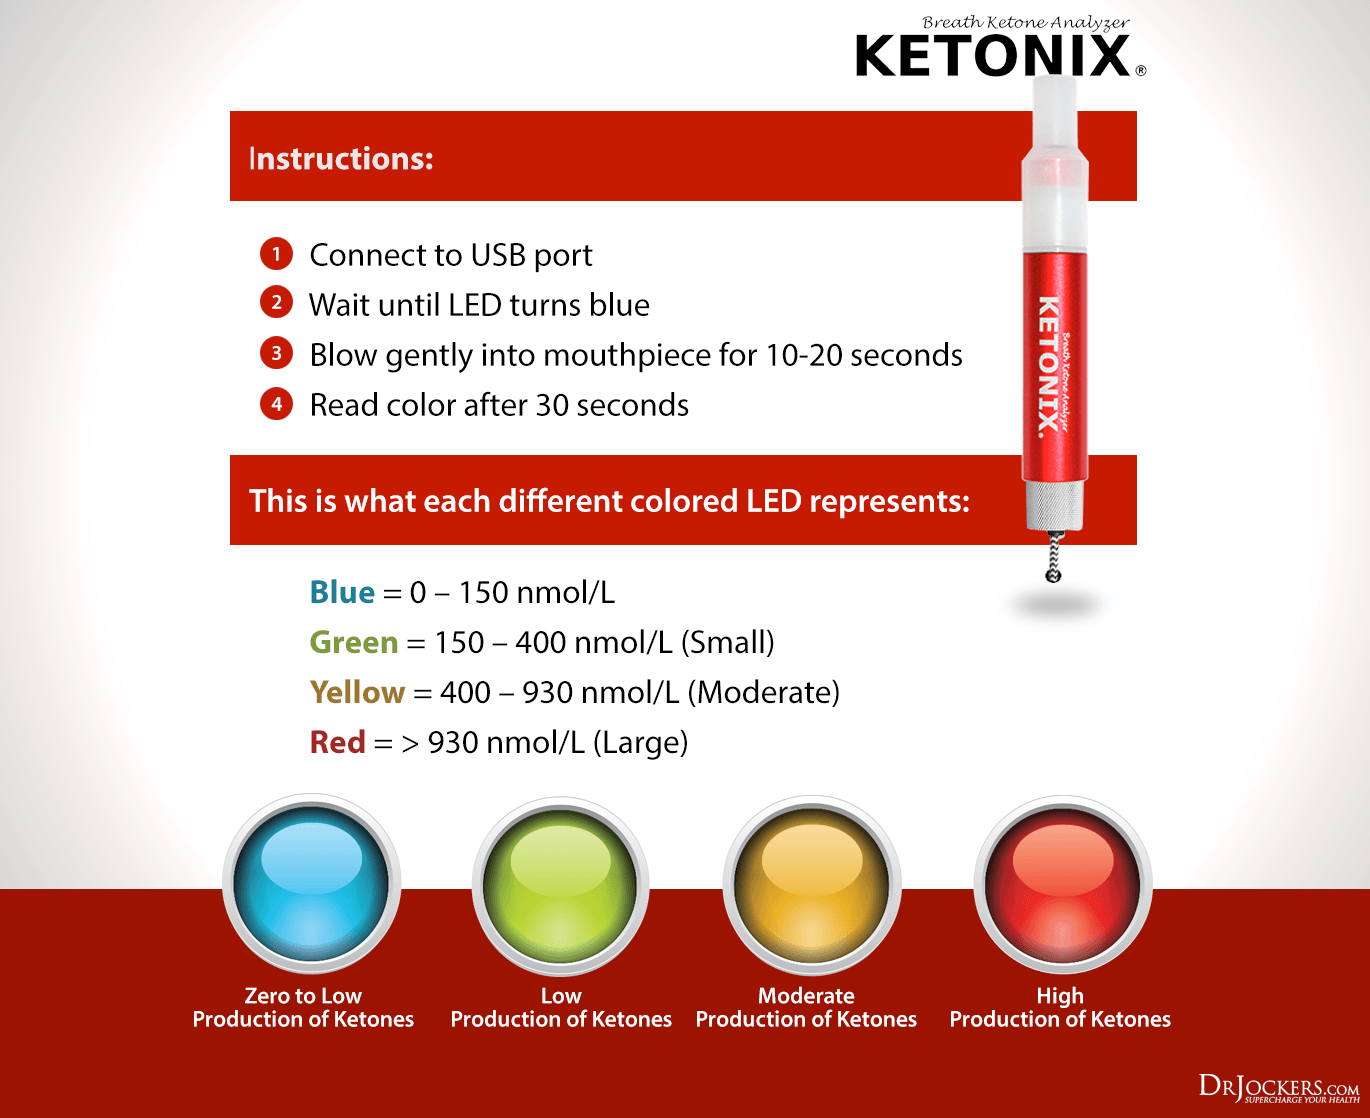 measure ketones, 5 Ways To Measure Ketones In Your Body